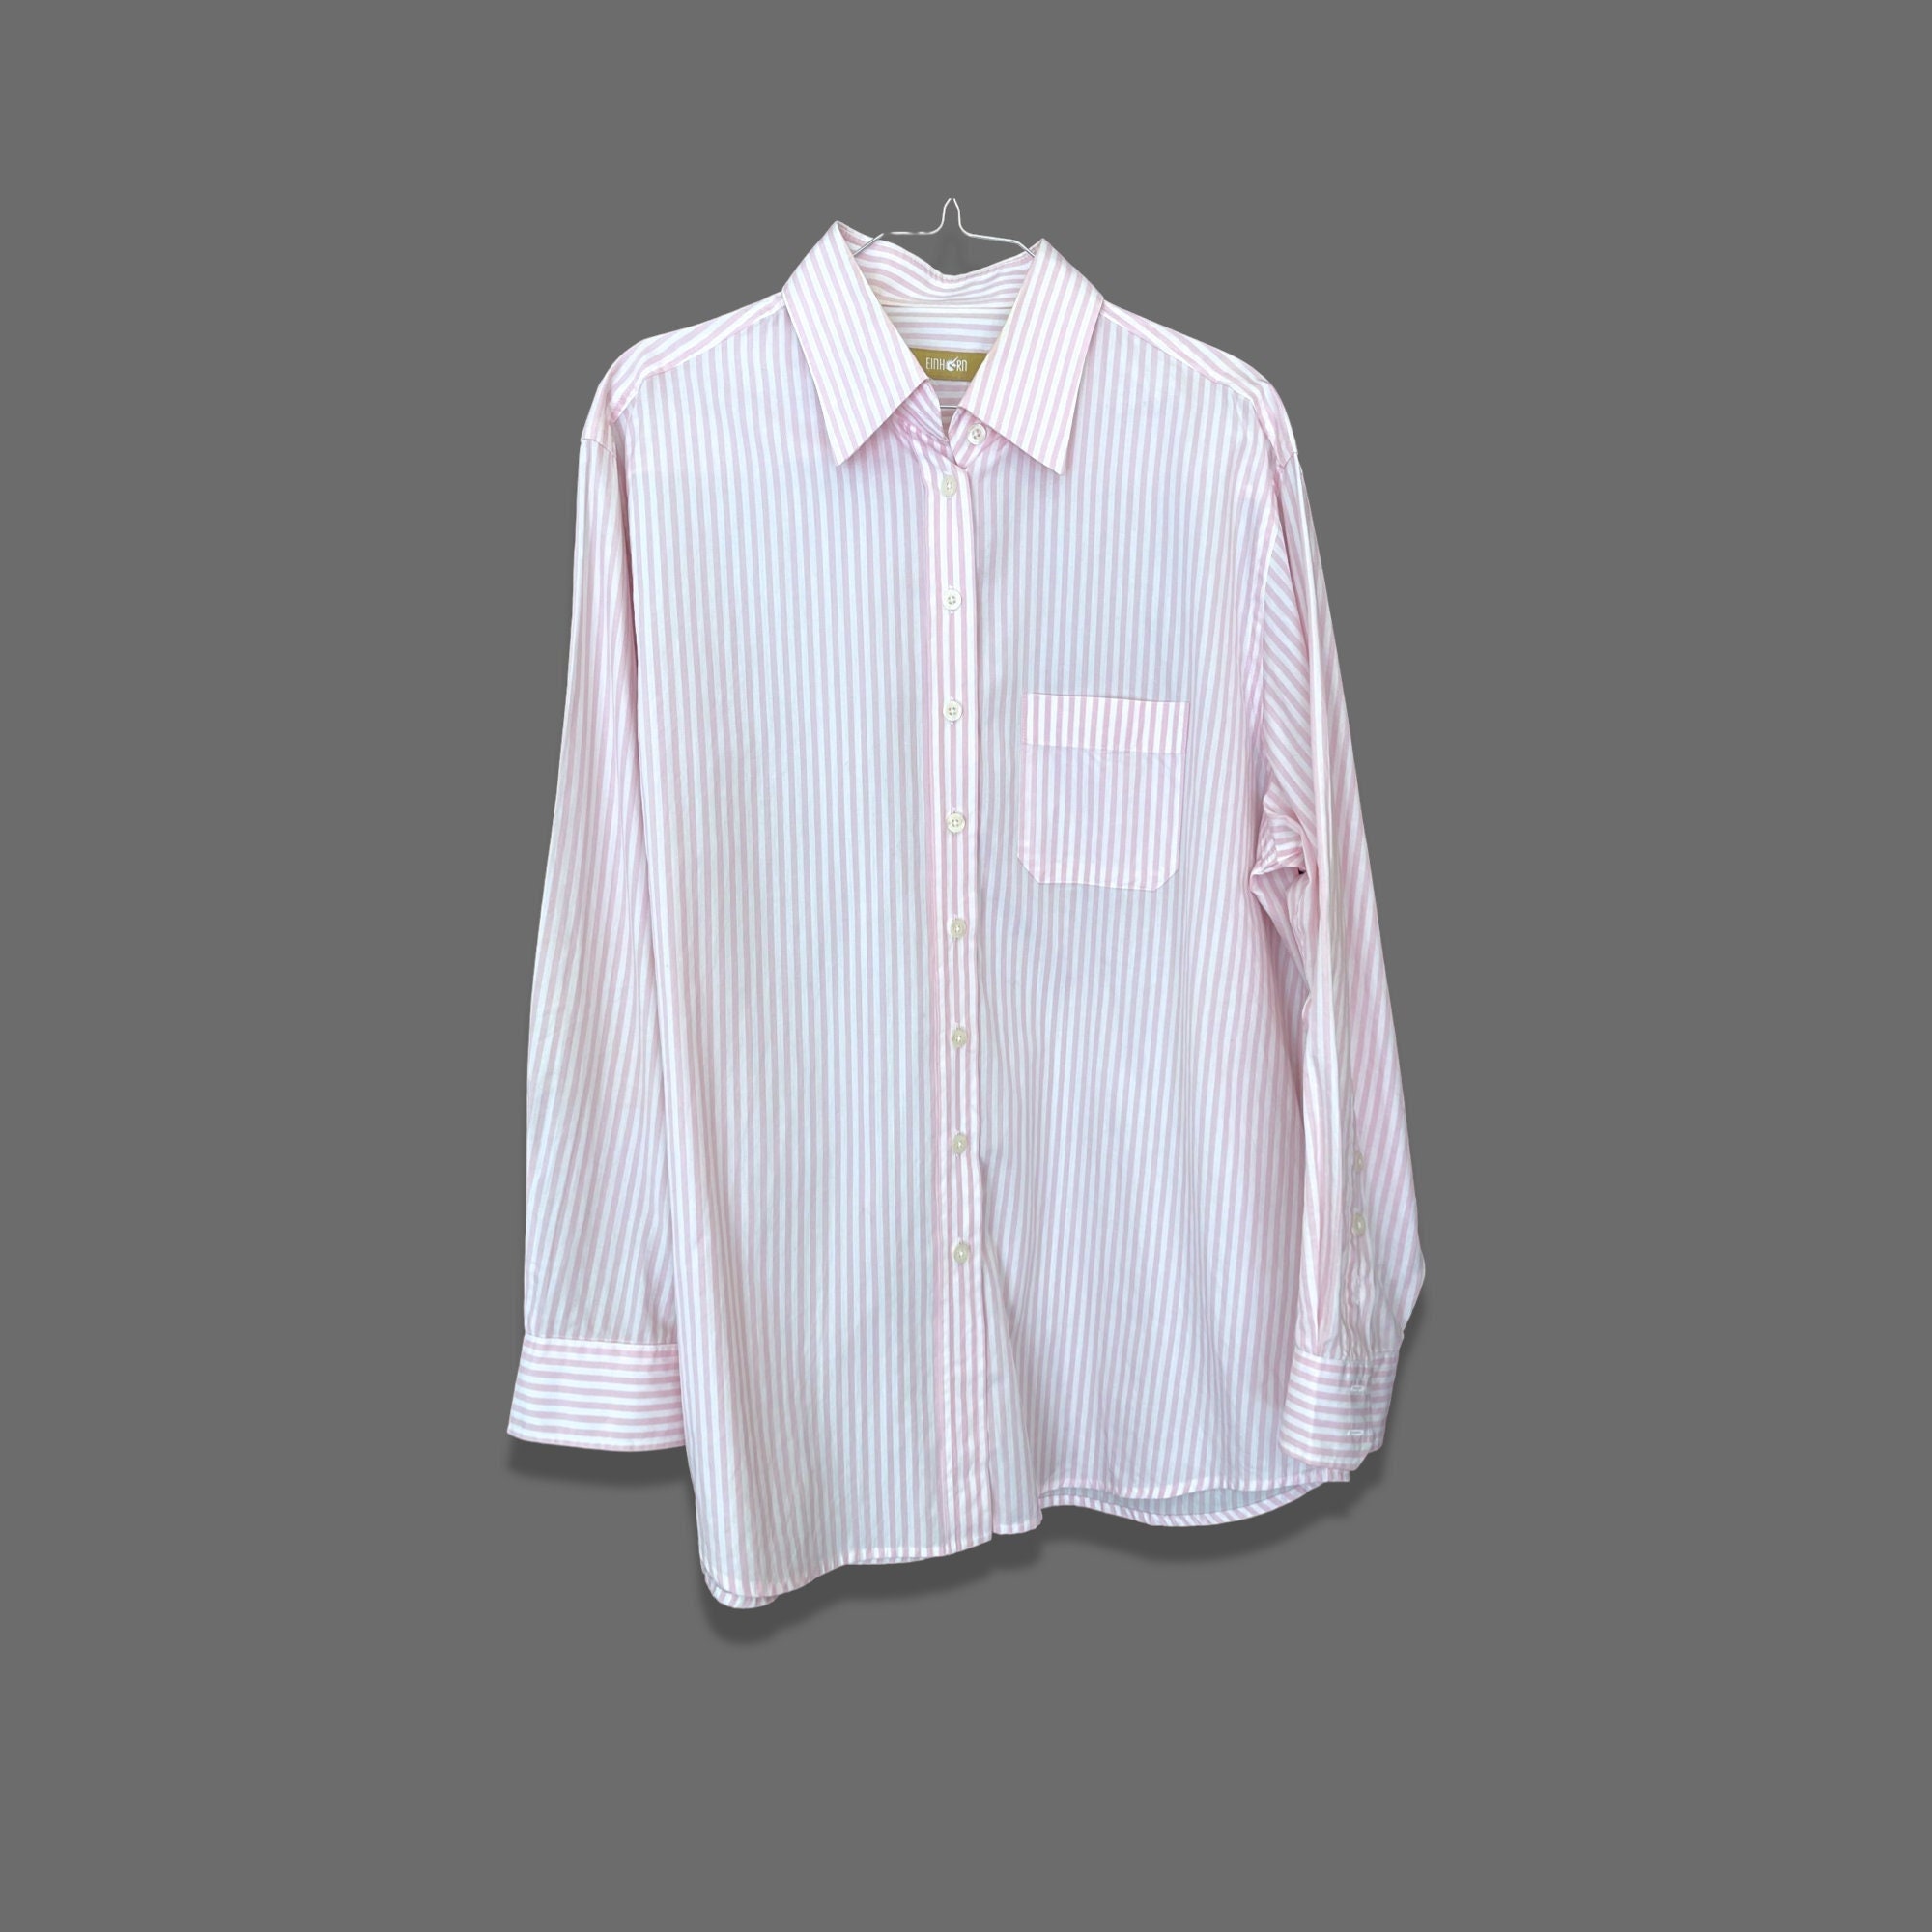 Kleding Herenkleding Overhemden & T-shirts Oxfords & Buttondowns Roze Chef Shirt mannen vintage jaren 80 gestreept katoenen shirt retro mannen kleding vriendje cadeau maatje klein 